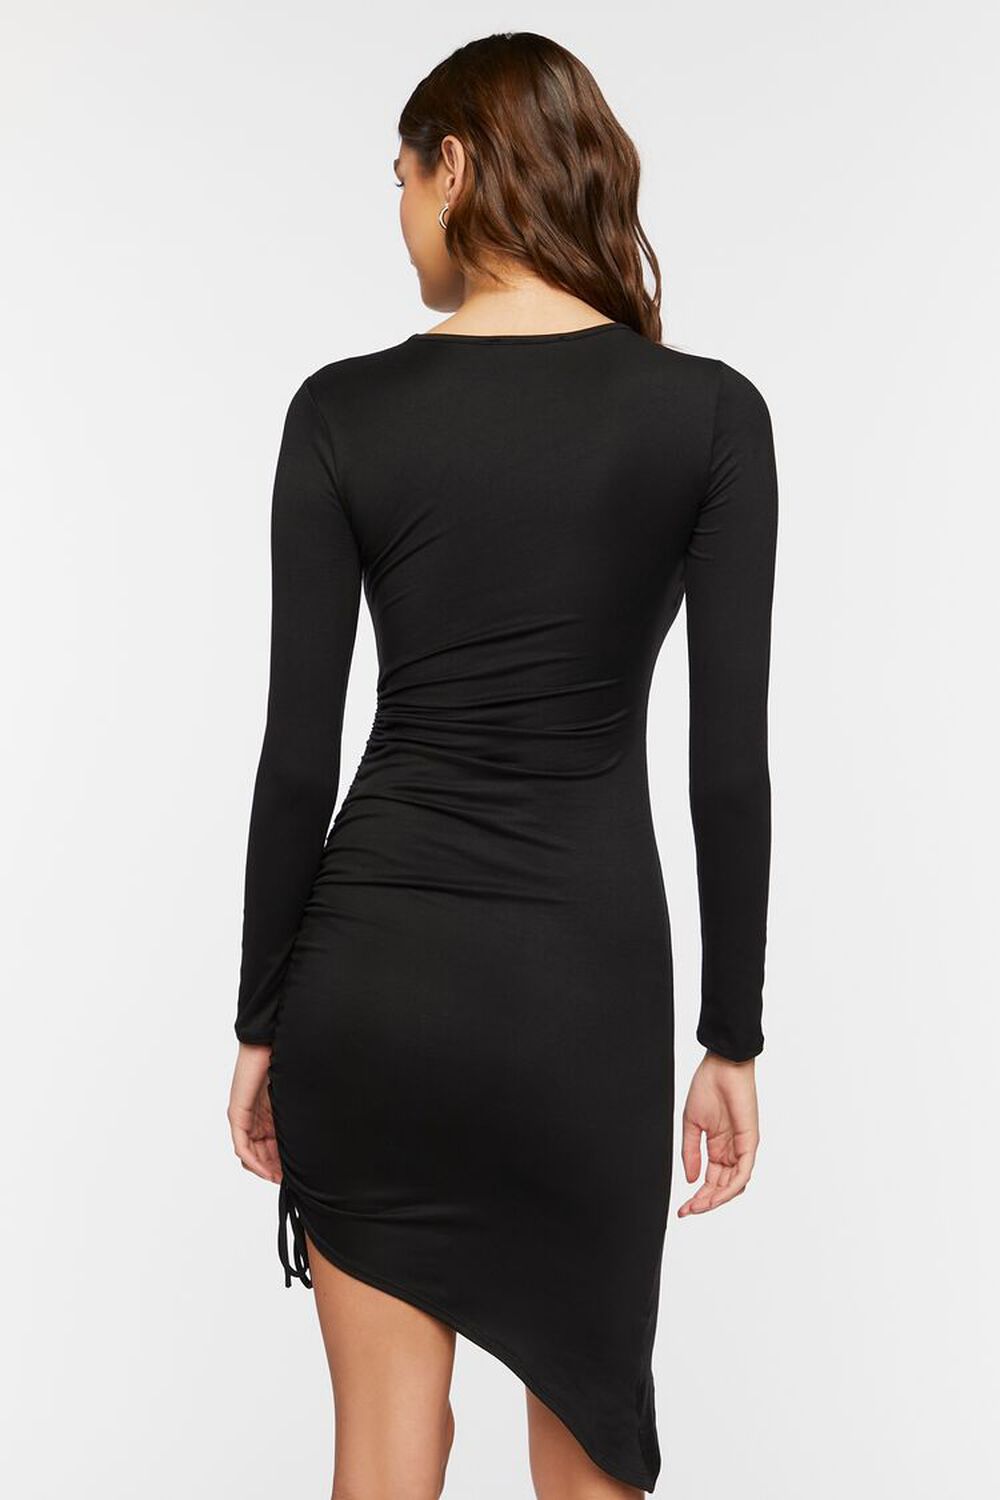 BLACK Asymmetrical Ruched Drawstring Dress, image 3